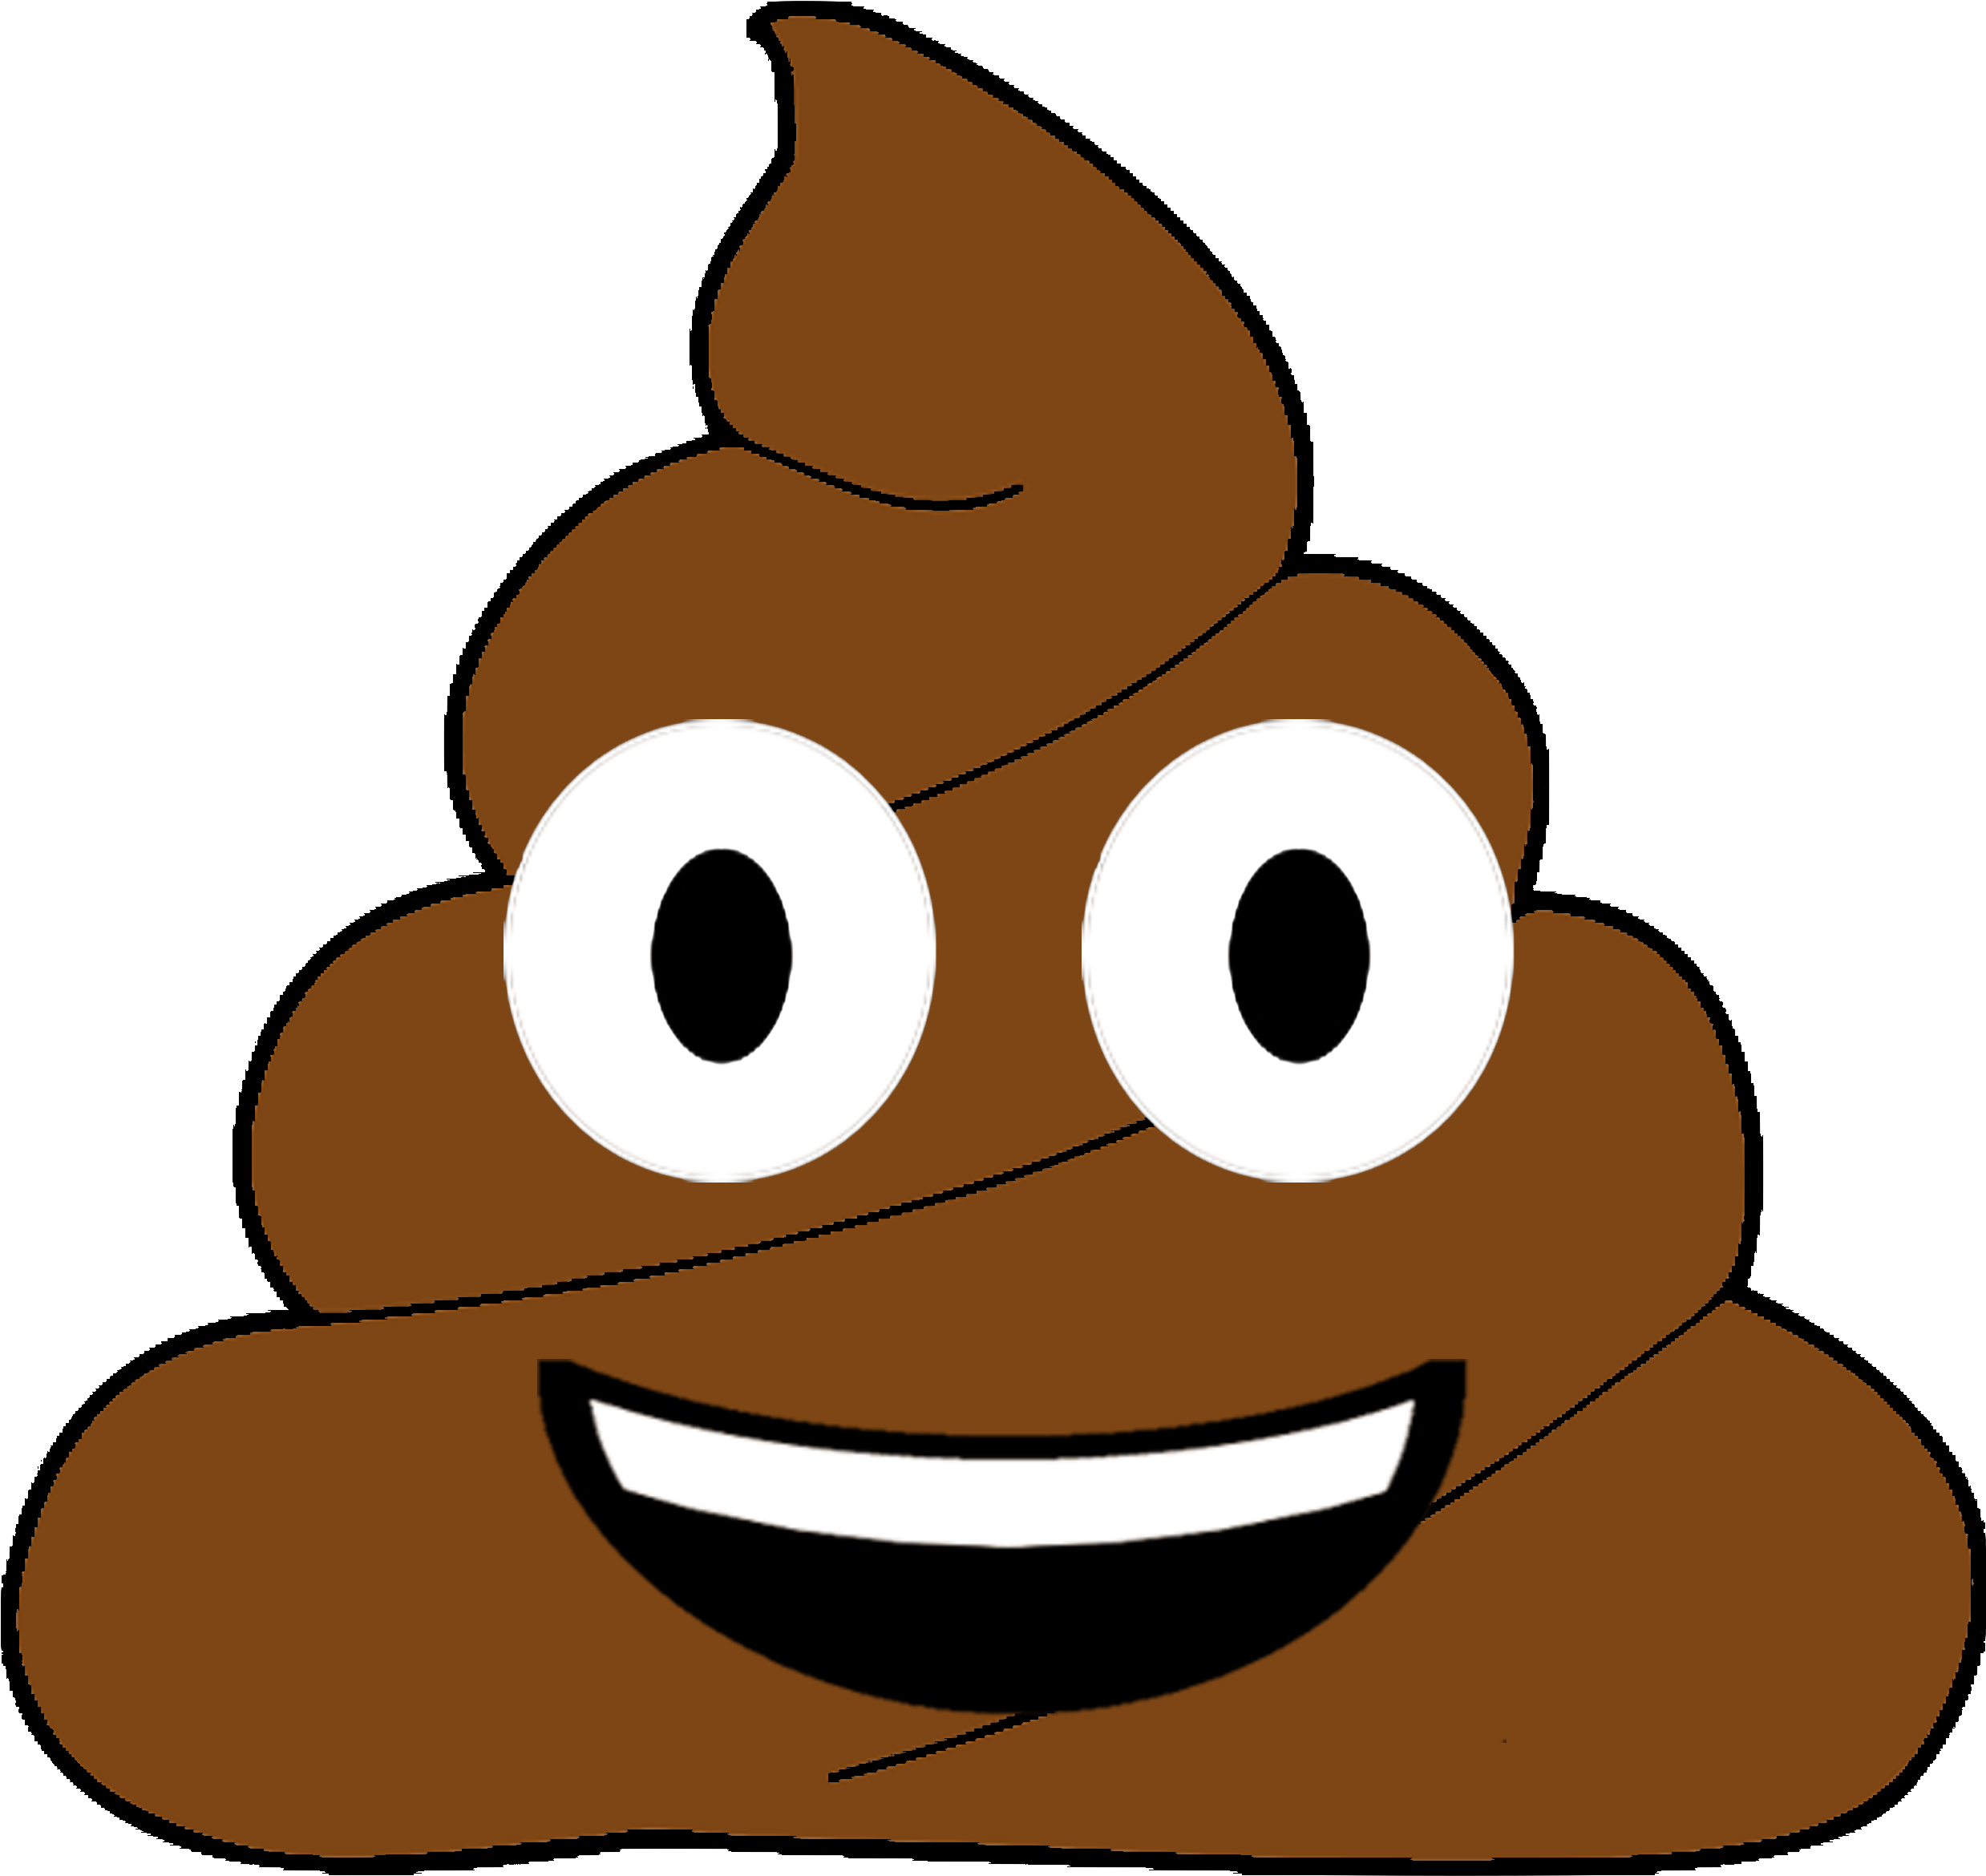 Brown Poop Emoji PNG Bild Herunterladen